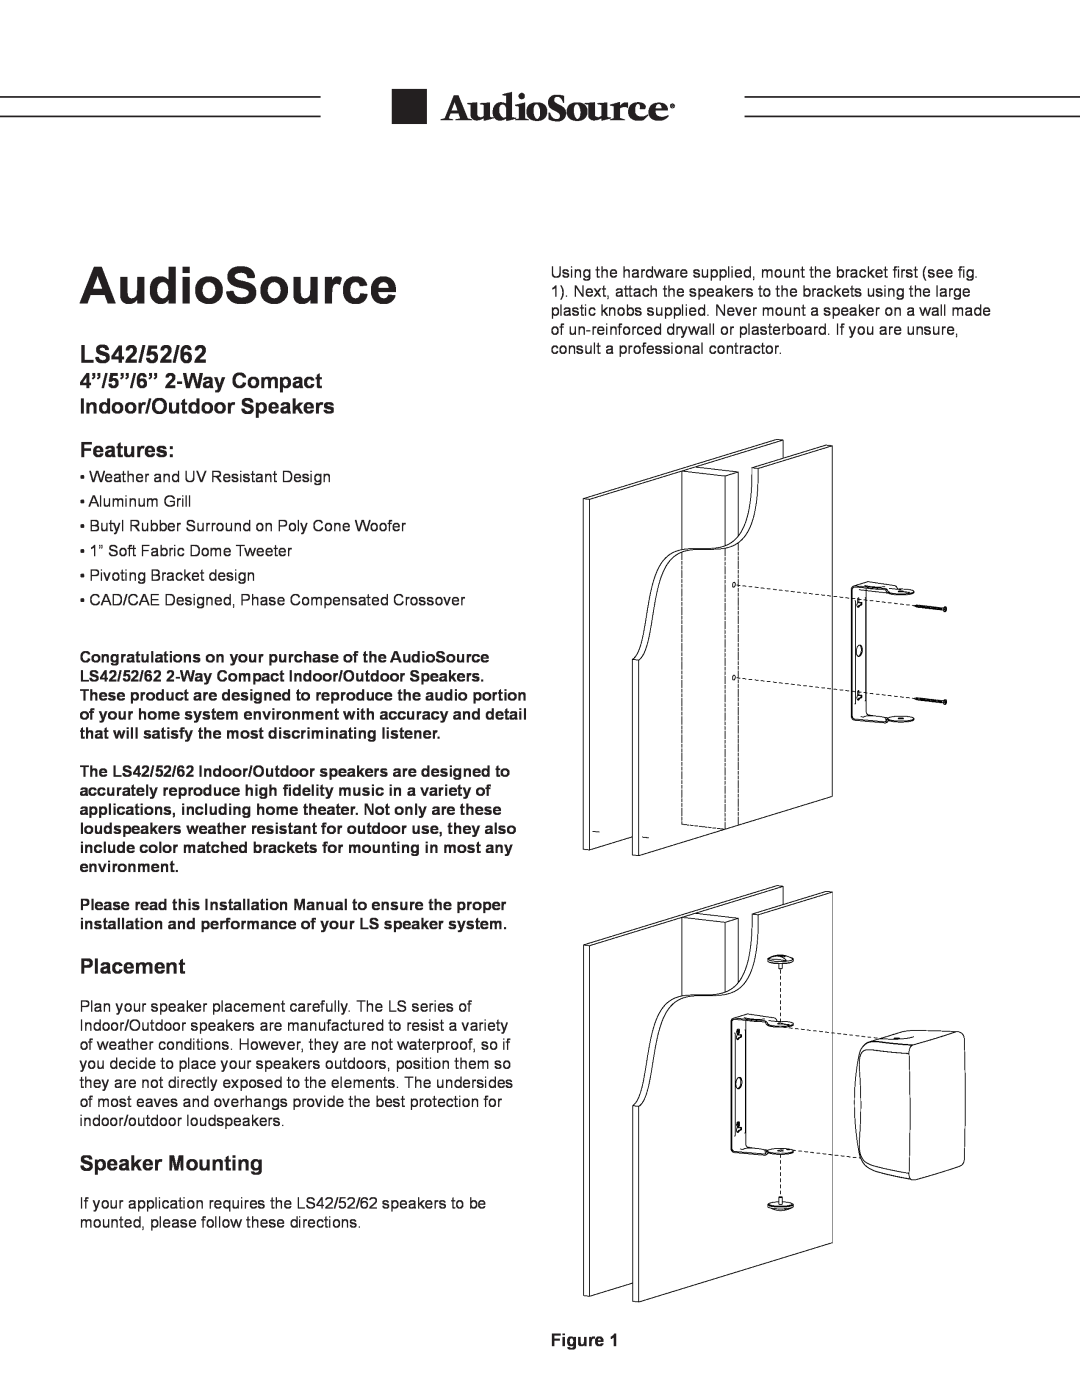 AudioSource 4"/5"/6" 2-Way Compact Indoor/Outdoor Speakers installation manual Features, Placement, Speaker Mounting 